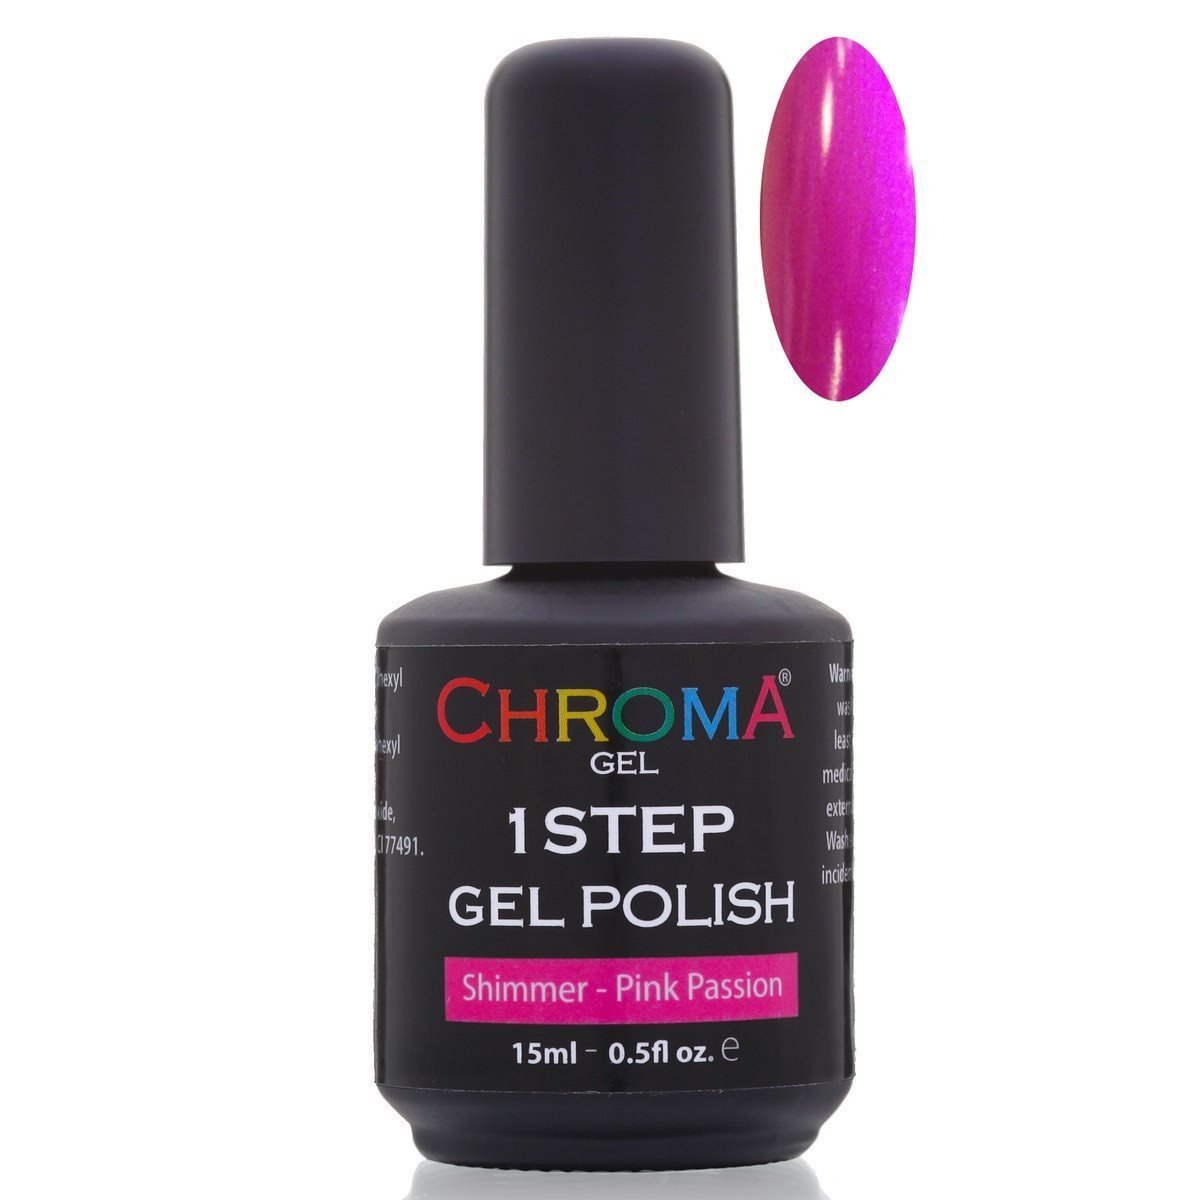 Chroma Gel 1-Step Gel Polish - Pink Passion No.19 with High Gloss and Purple Shimmer - beautyhair.co.ukChroma Gel